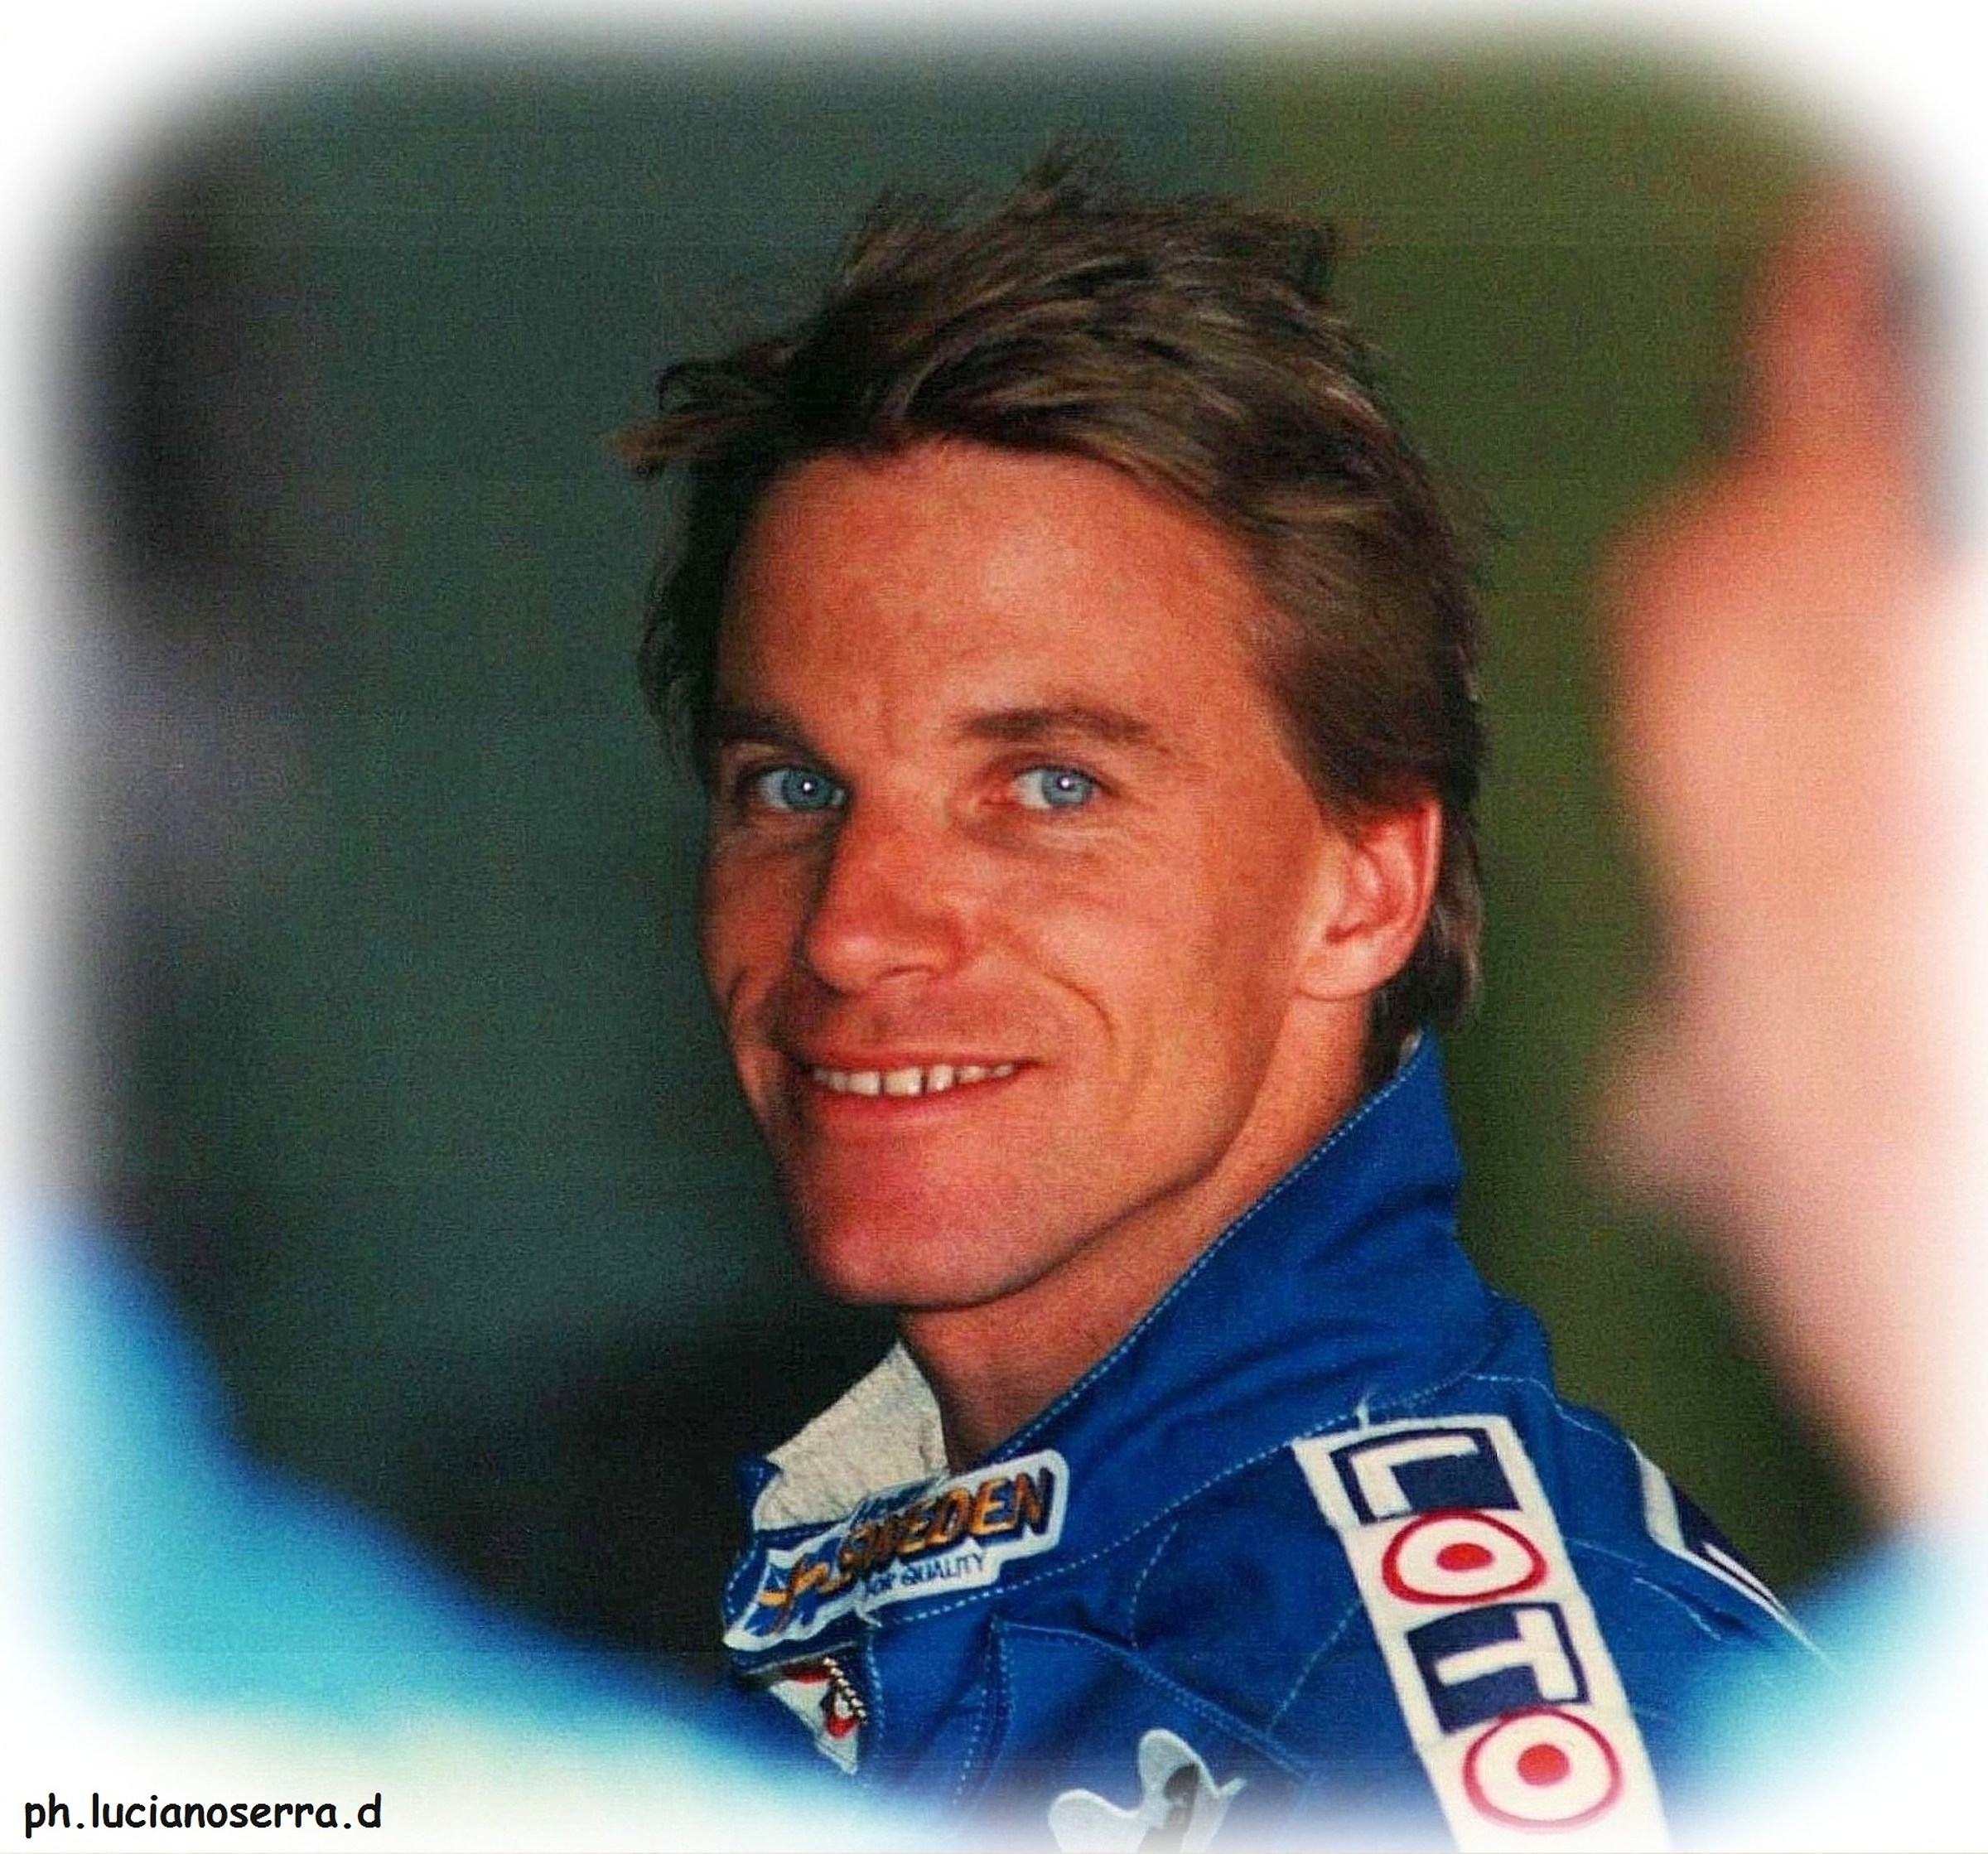 Stefan Johansson quando era pilota alla Equipe Ligier...